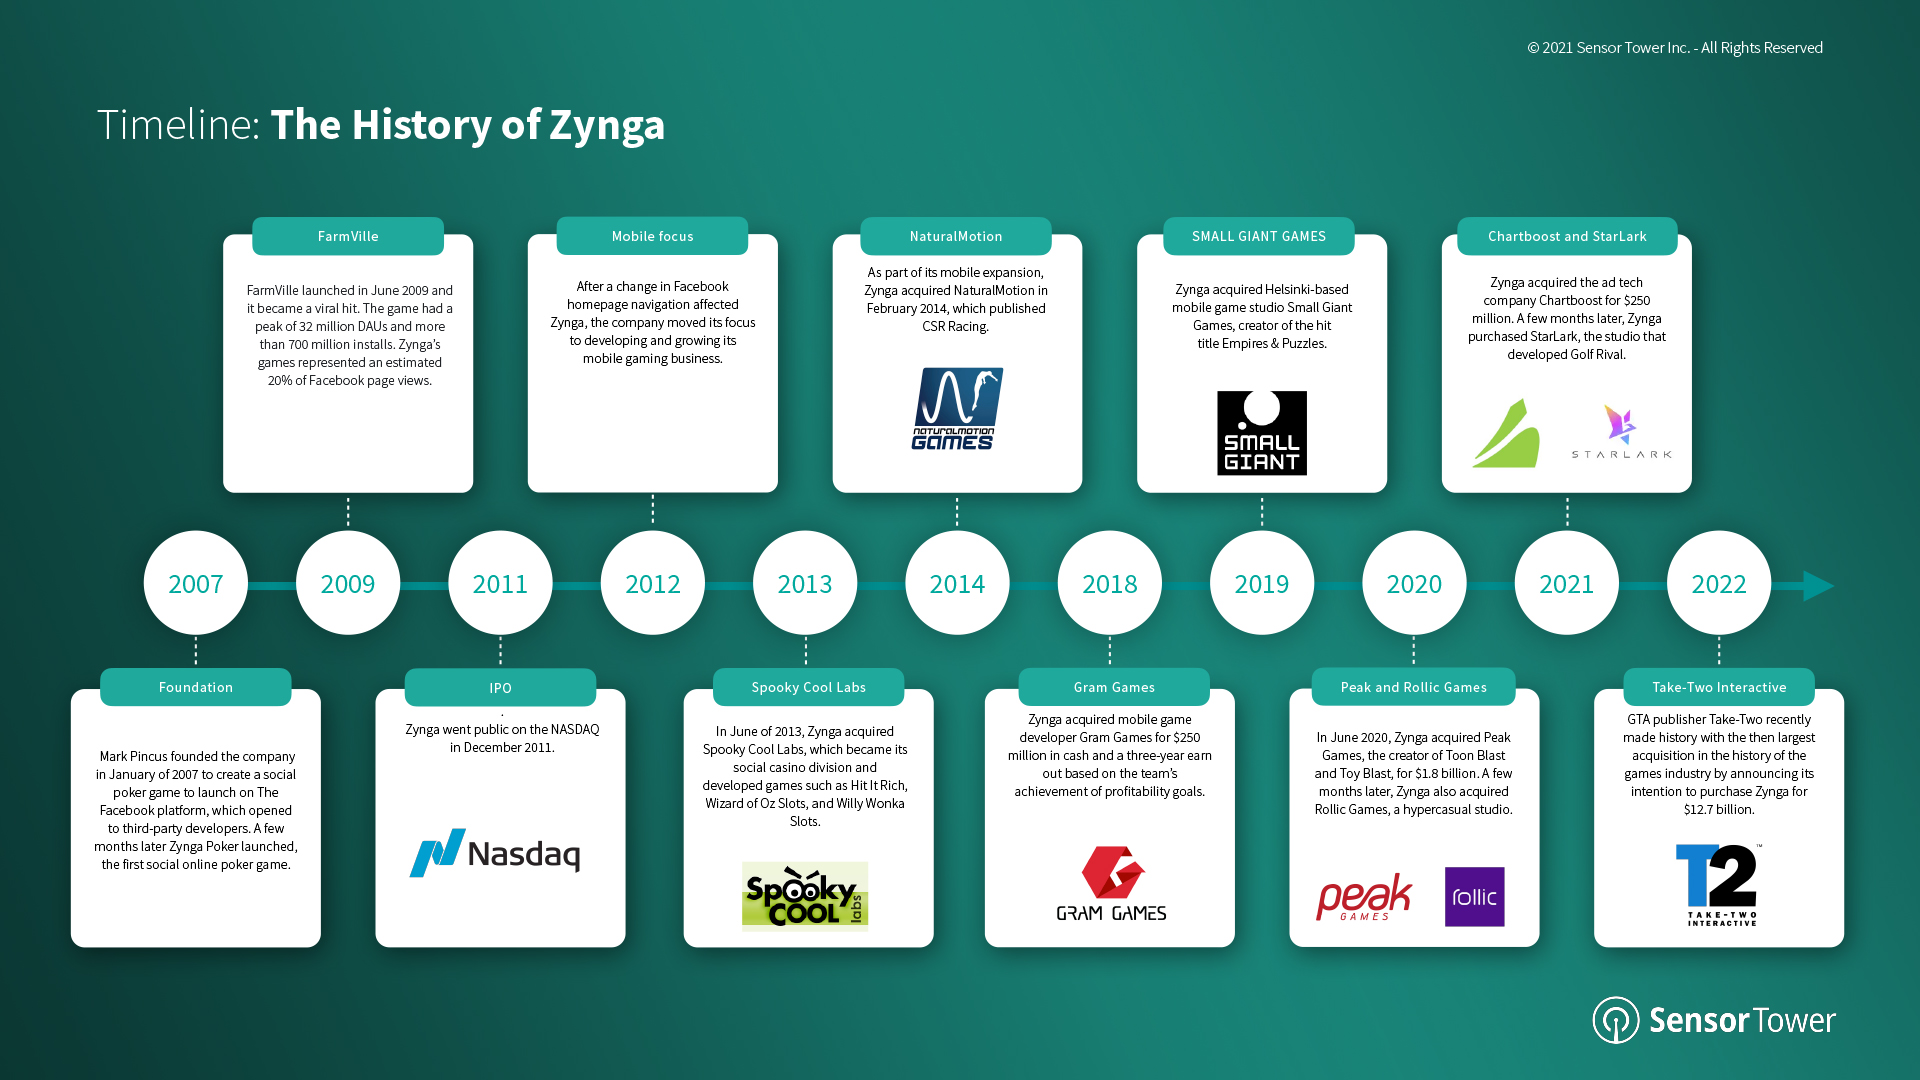 zynga-history-timeline-2022